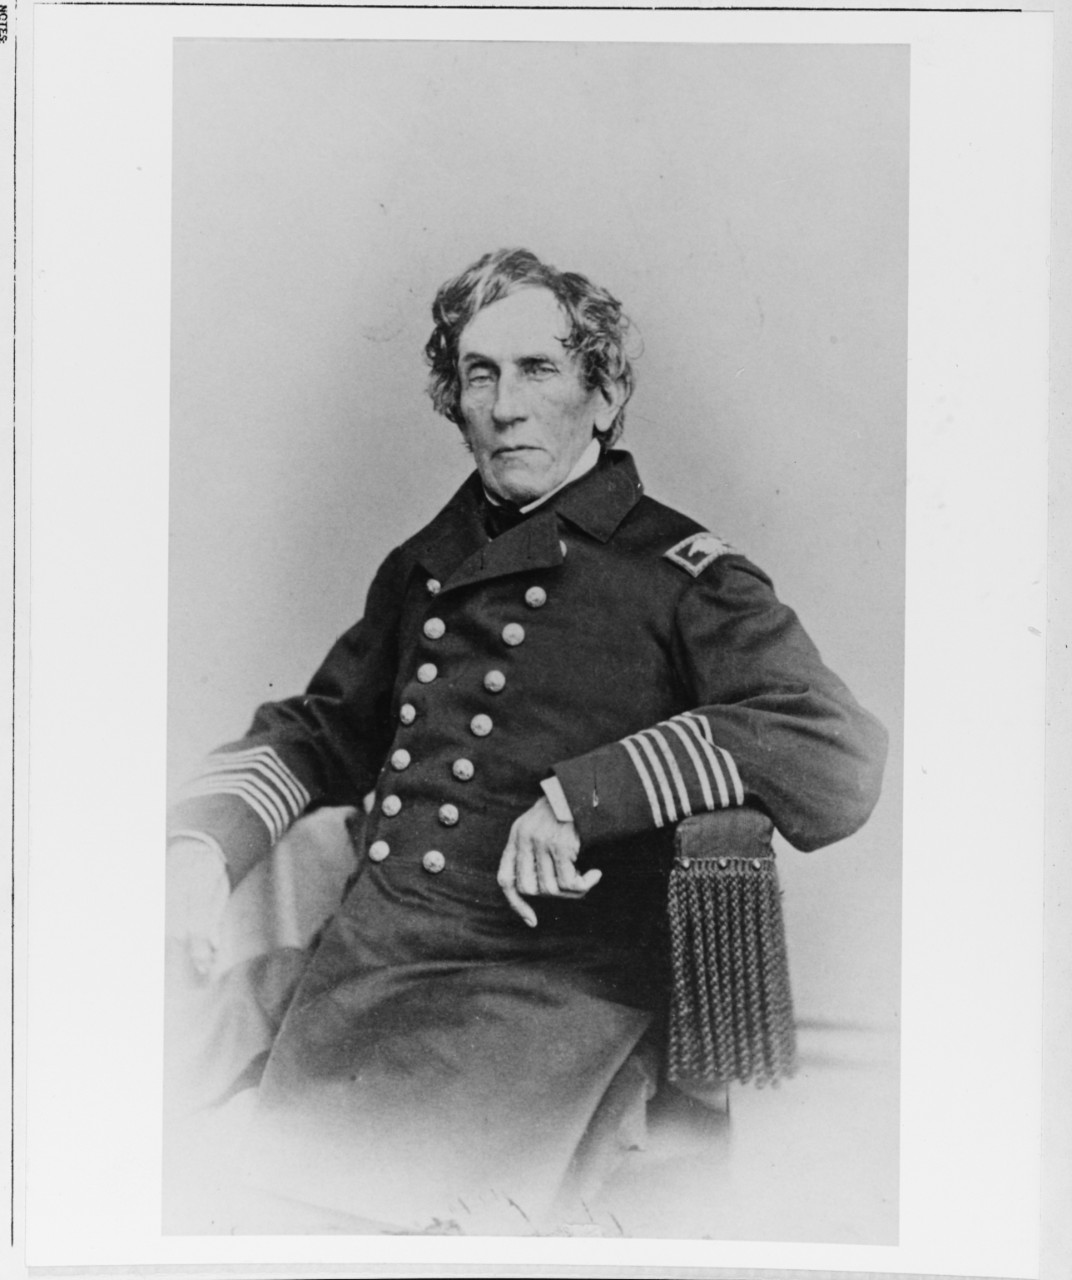 Paymaster Benjamin J. Cahoone, USN, circa 1864.